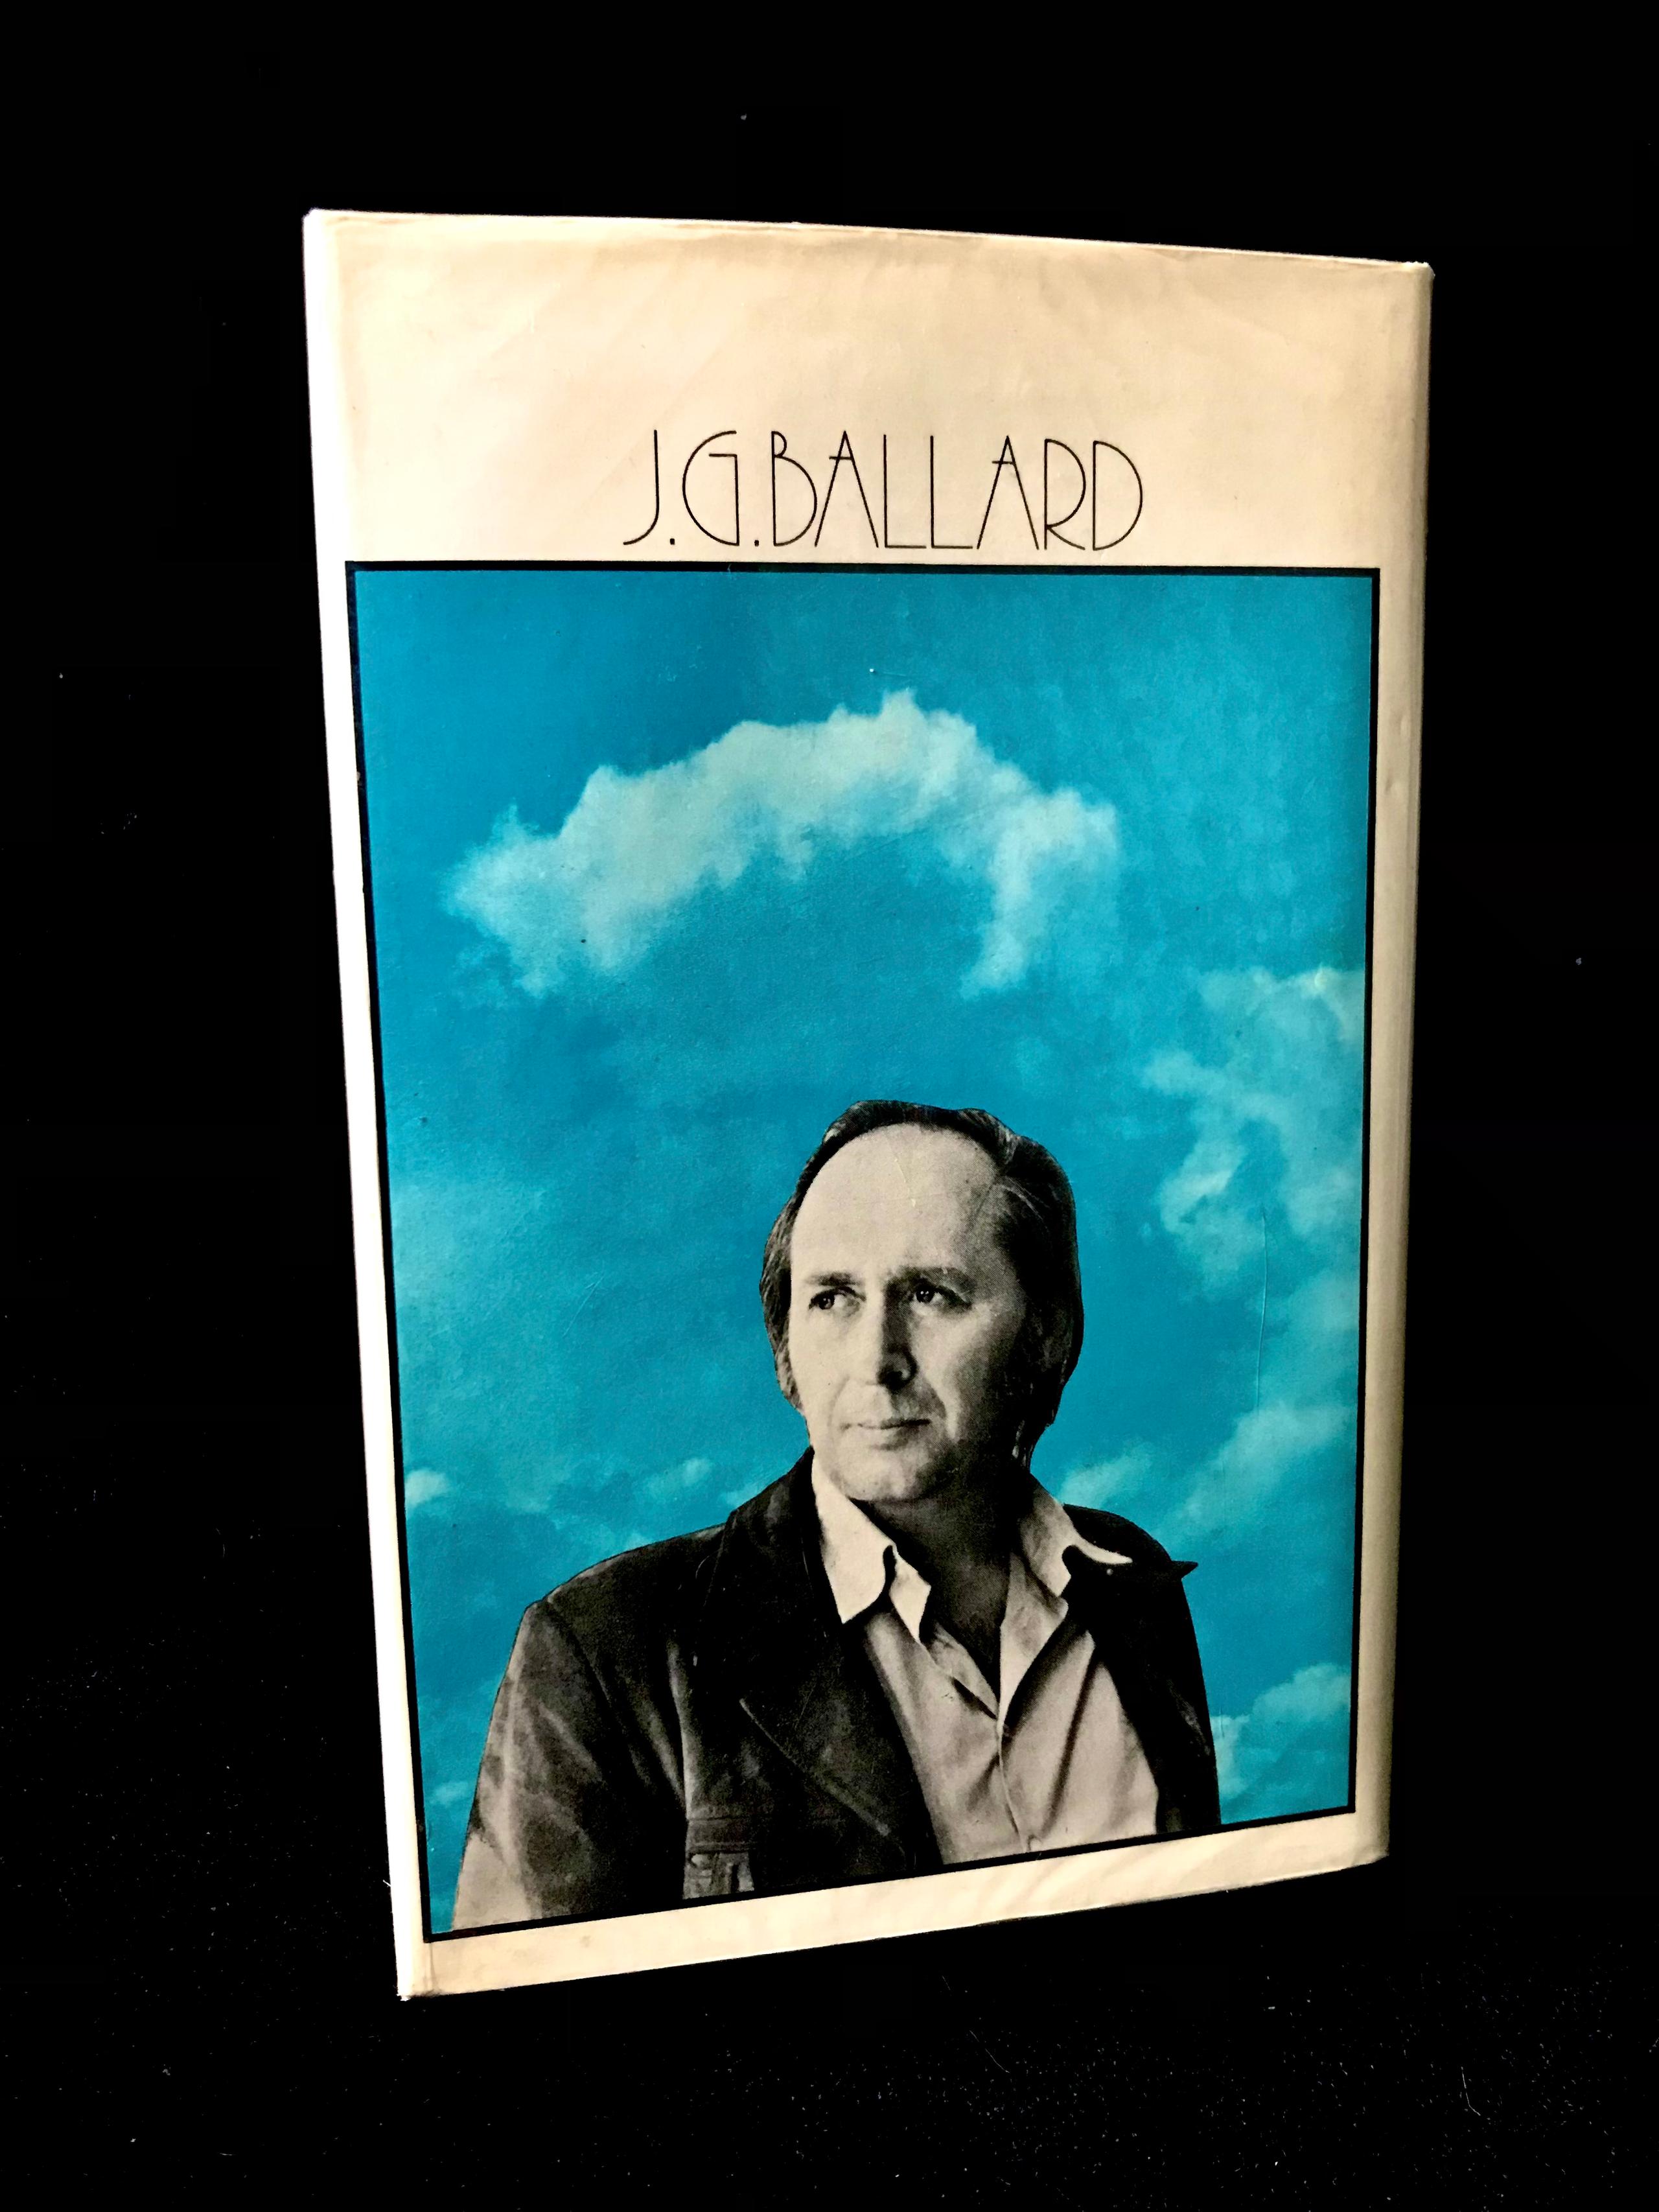 High-Rise by J. G. Ballard